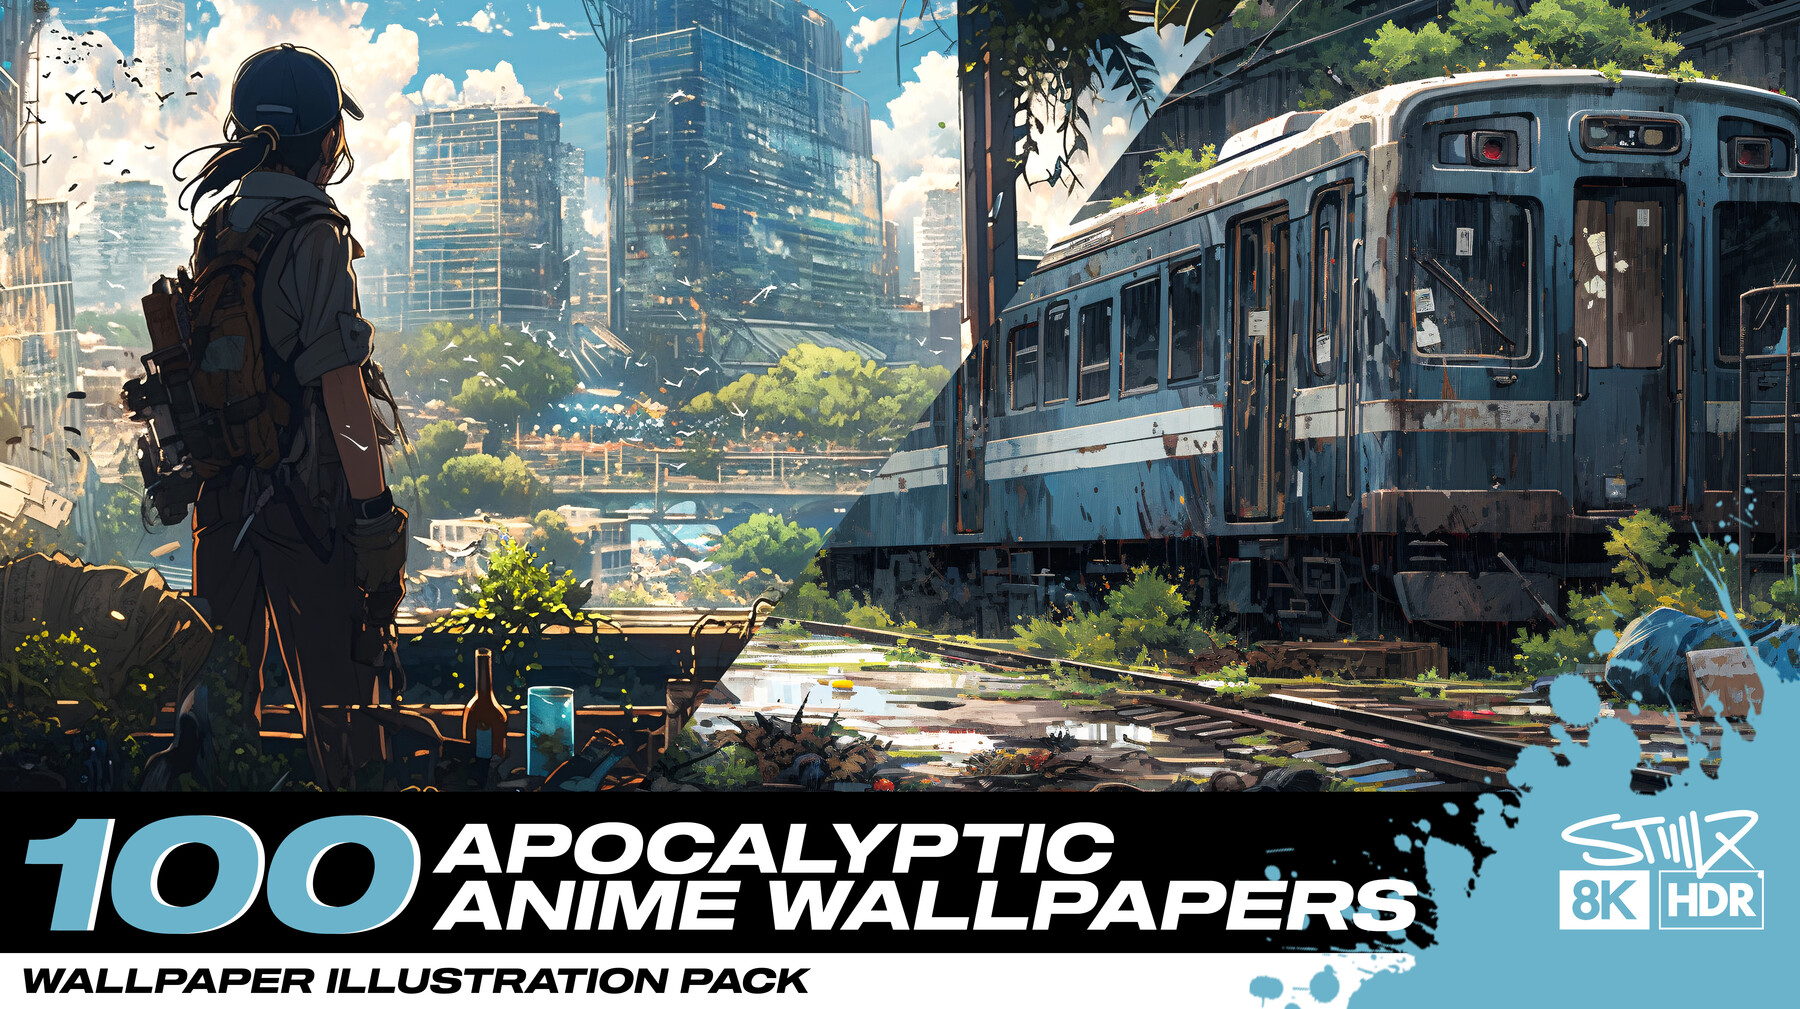 100+] 8k Anime Wallpapers